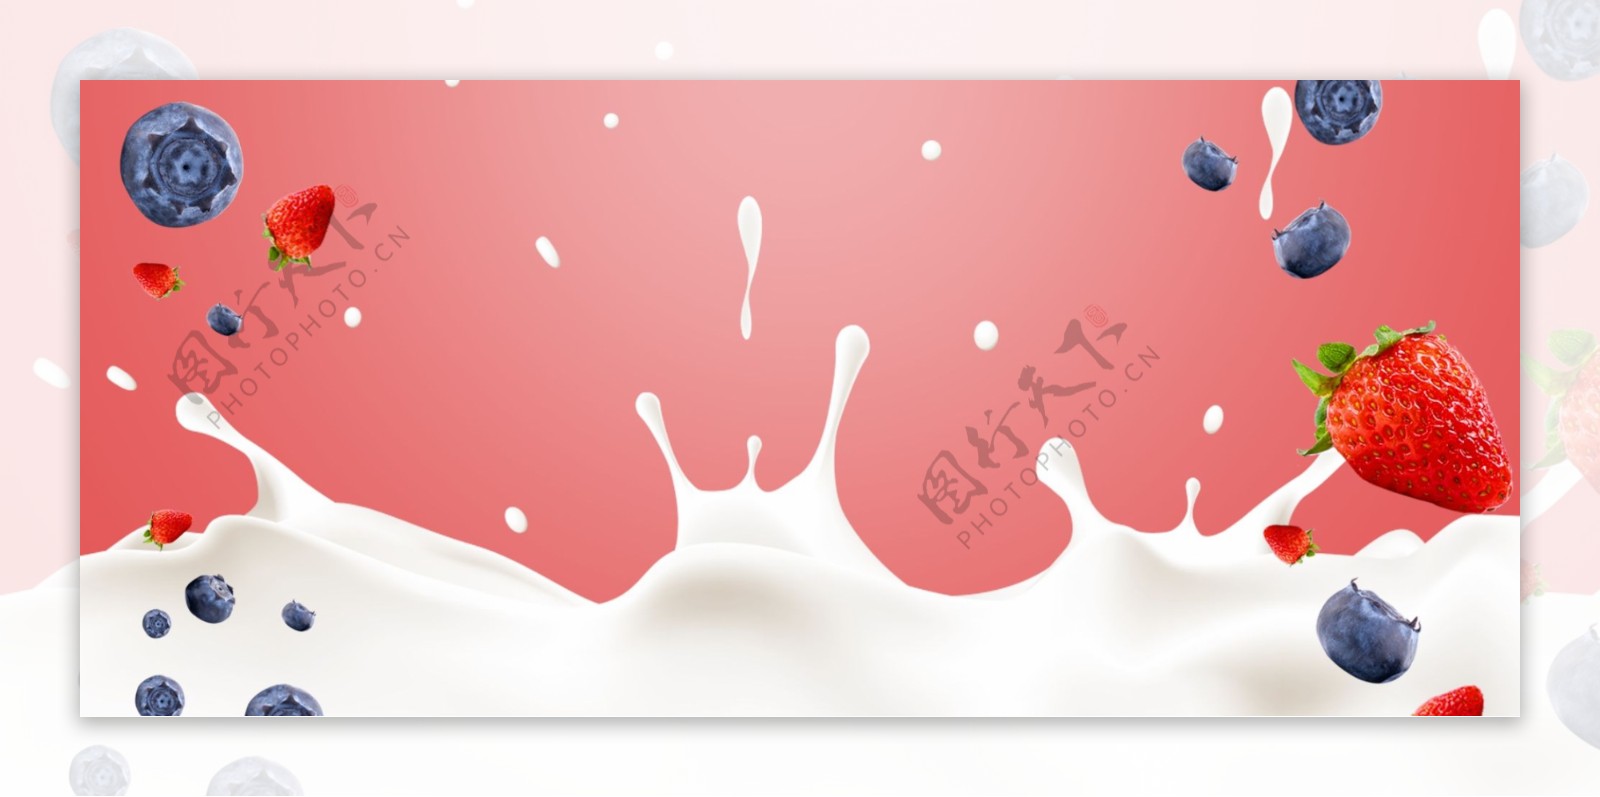 水果牛奶Banner背景